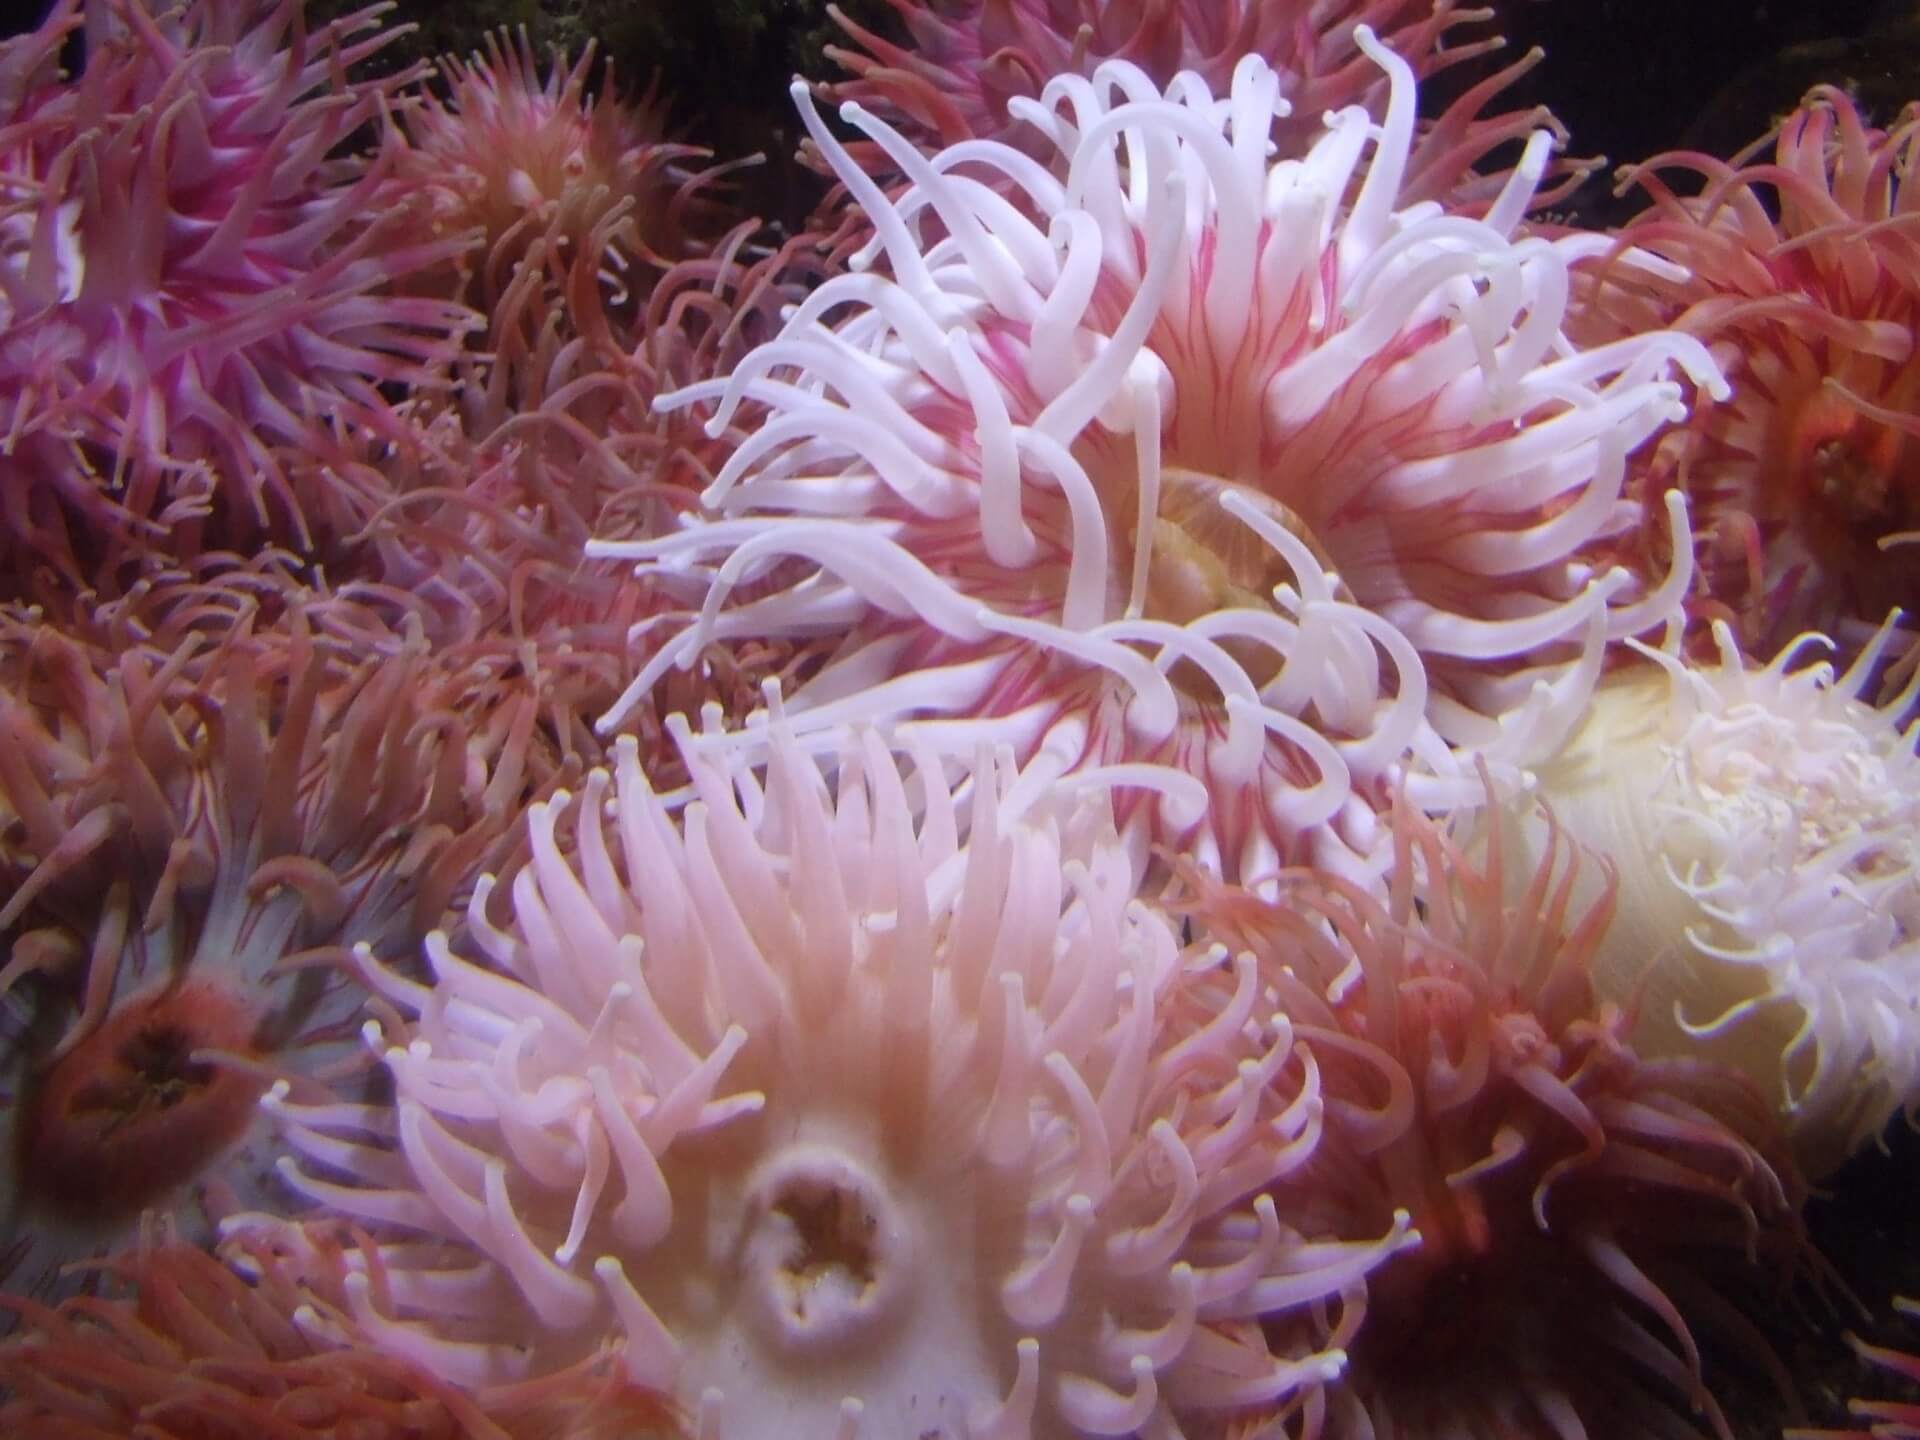 Image of recently split corals